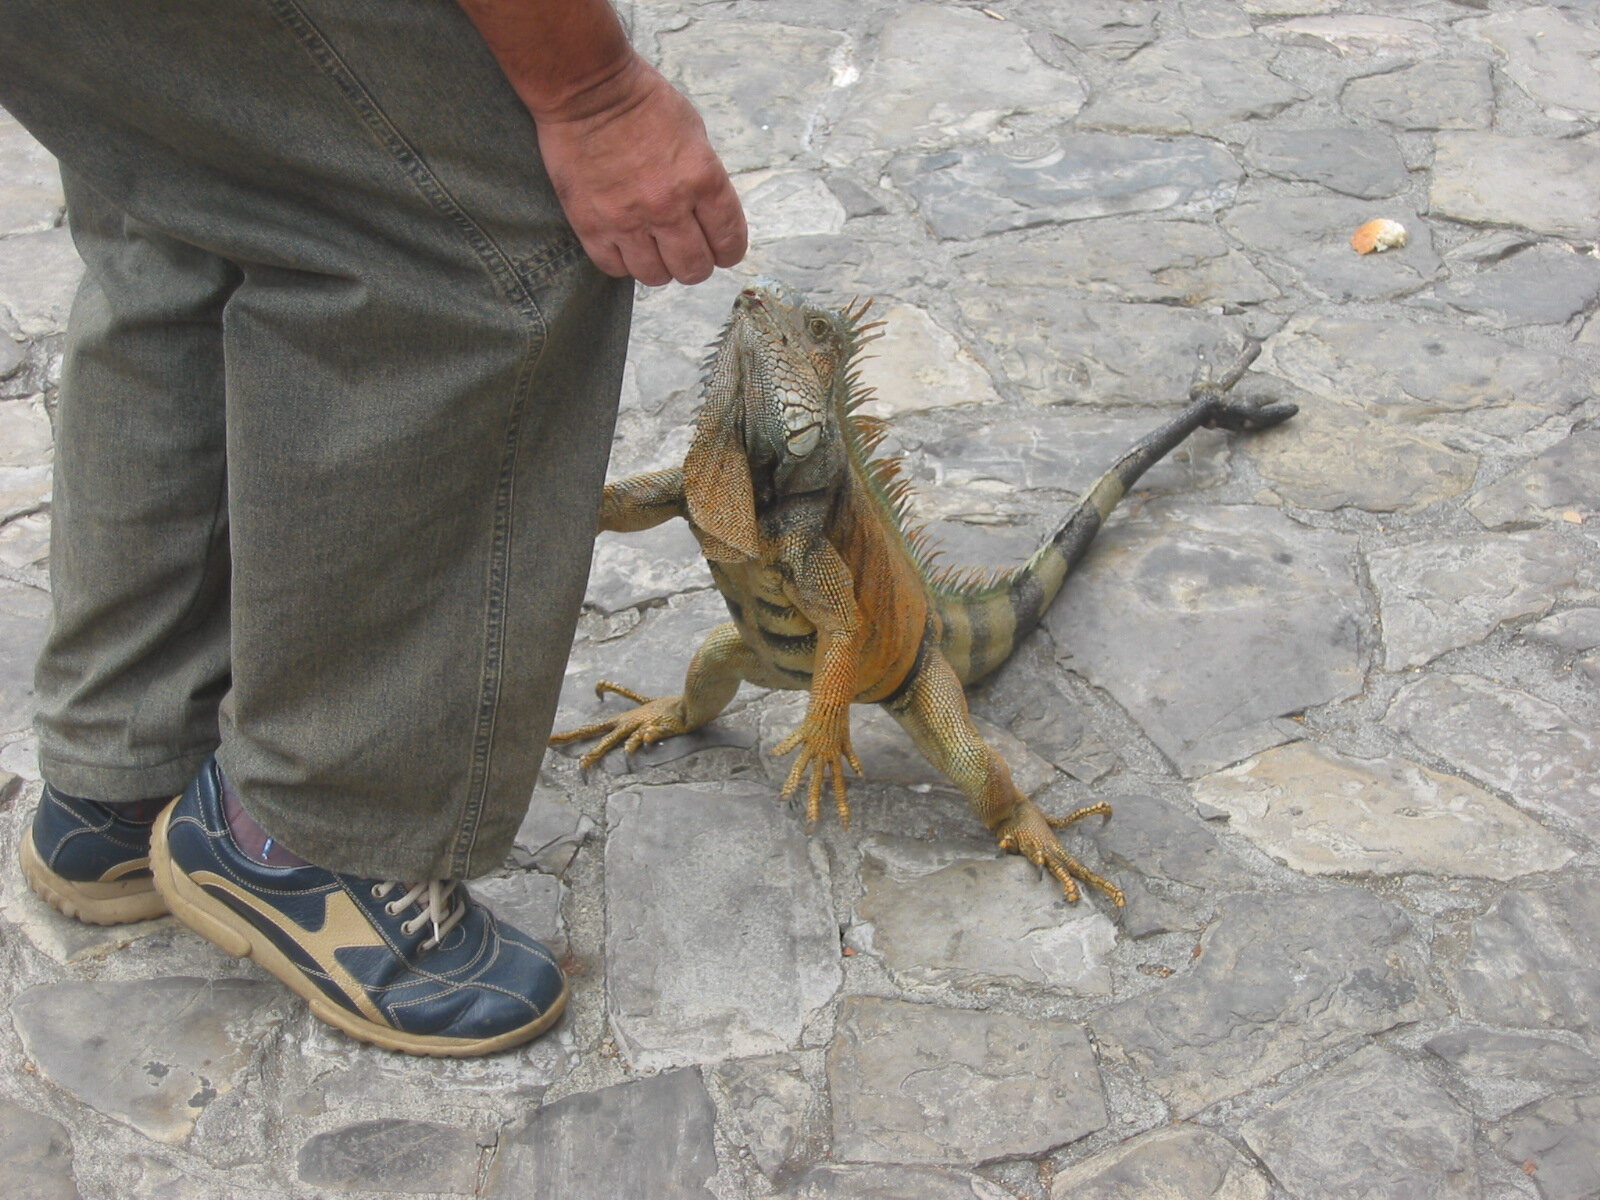 Feeding the iguanas